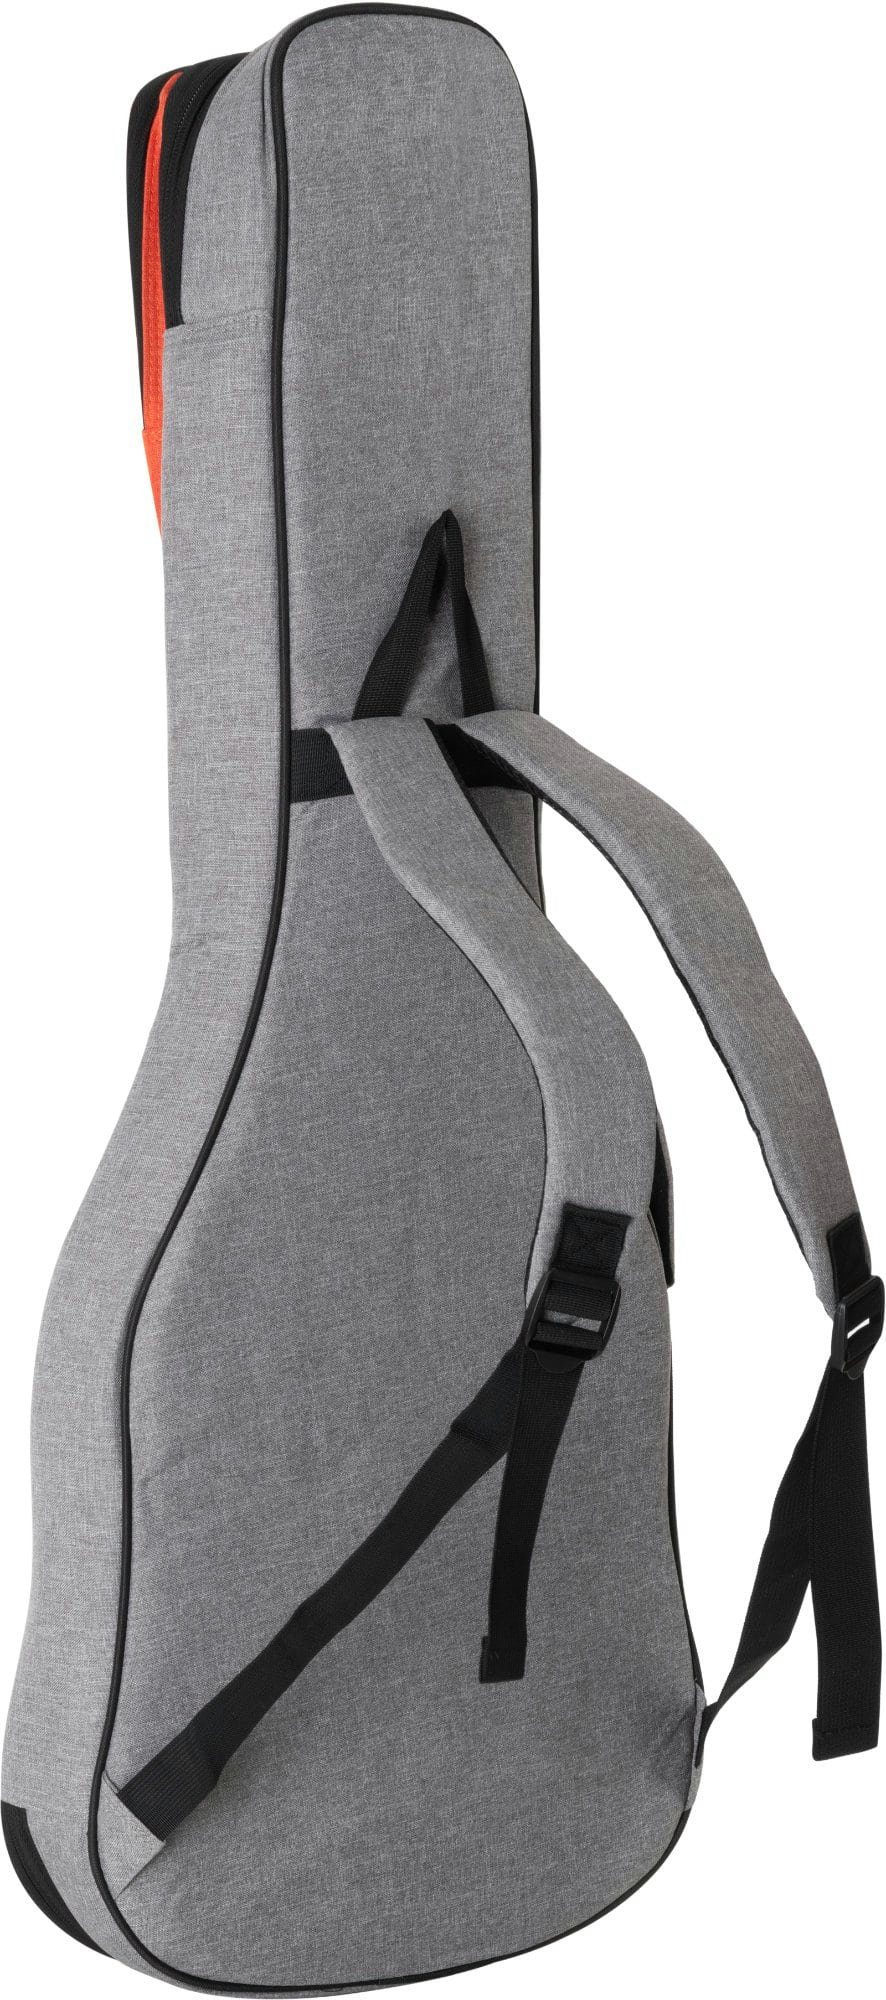 Kirstein Gitarrentasche E-Gitarrentasche mit EGBK-1122OG Grau, gepolsterte E-Gitarren-Tasche Rucksackgarnitur